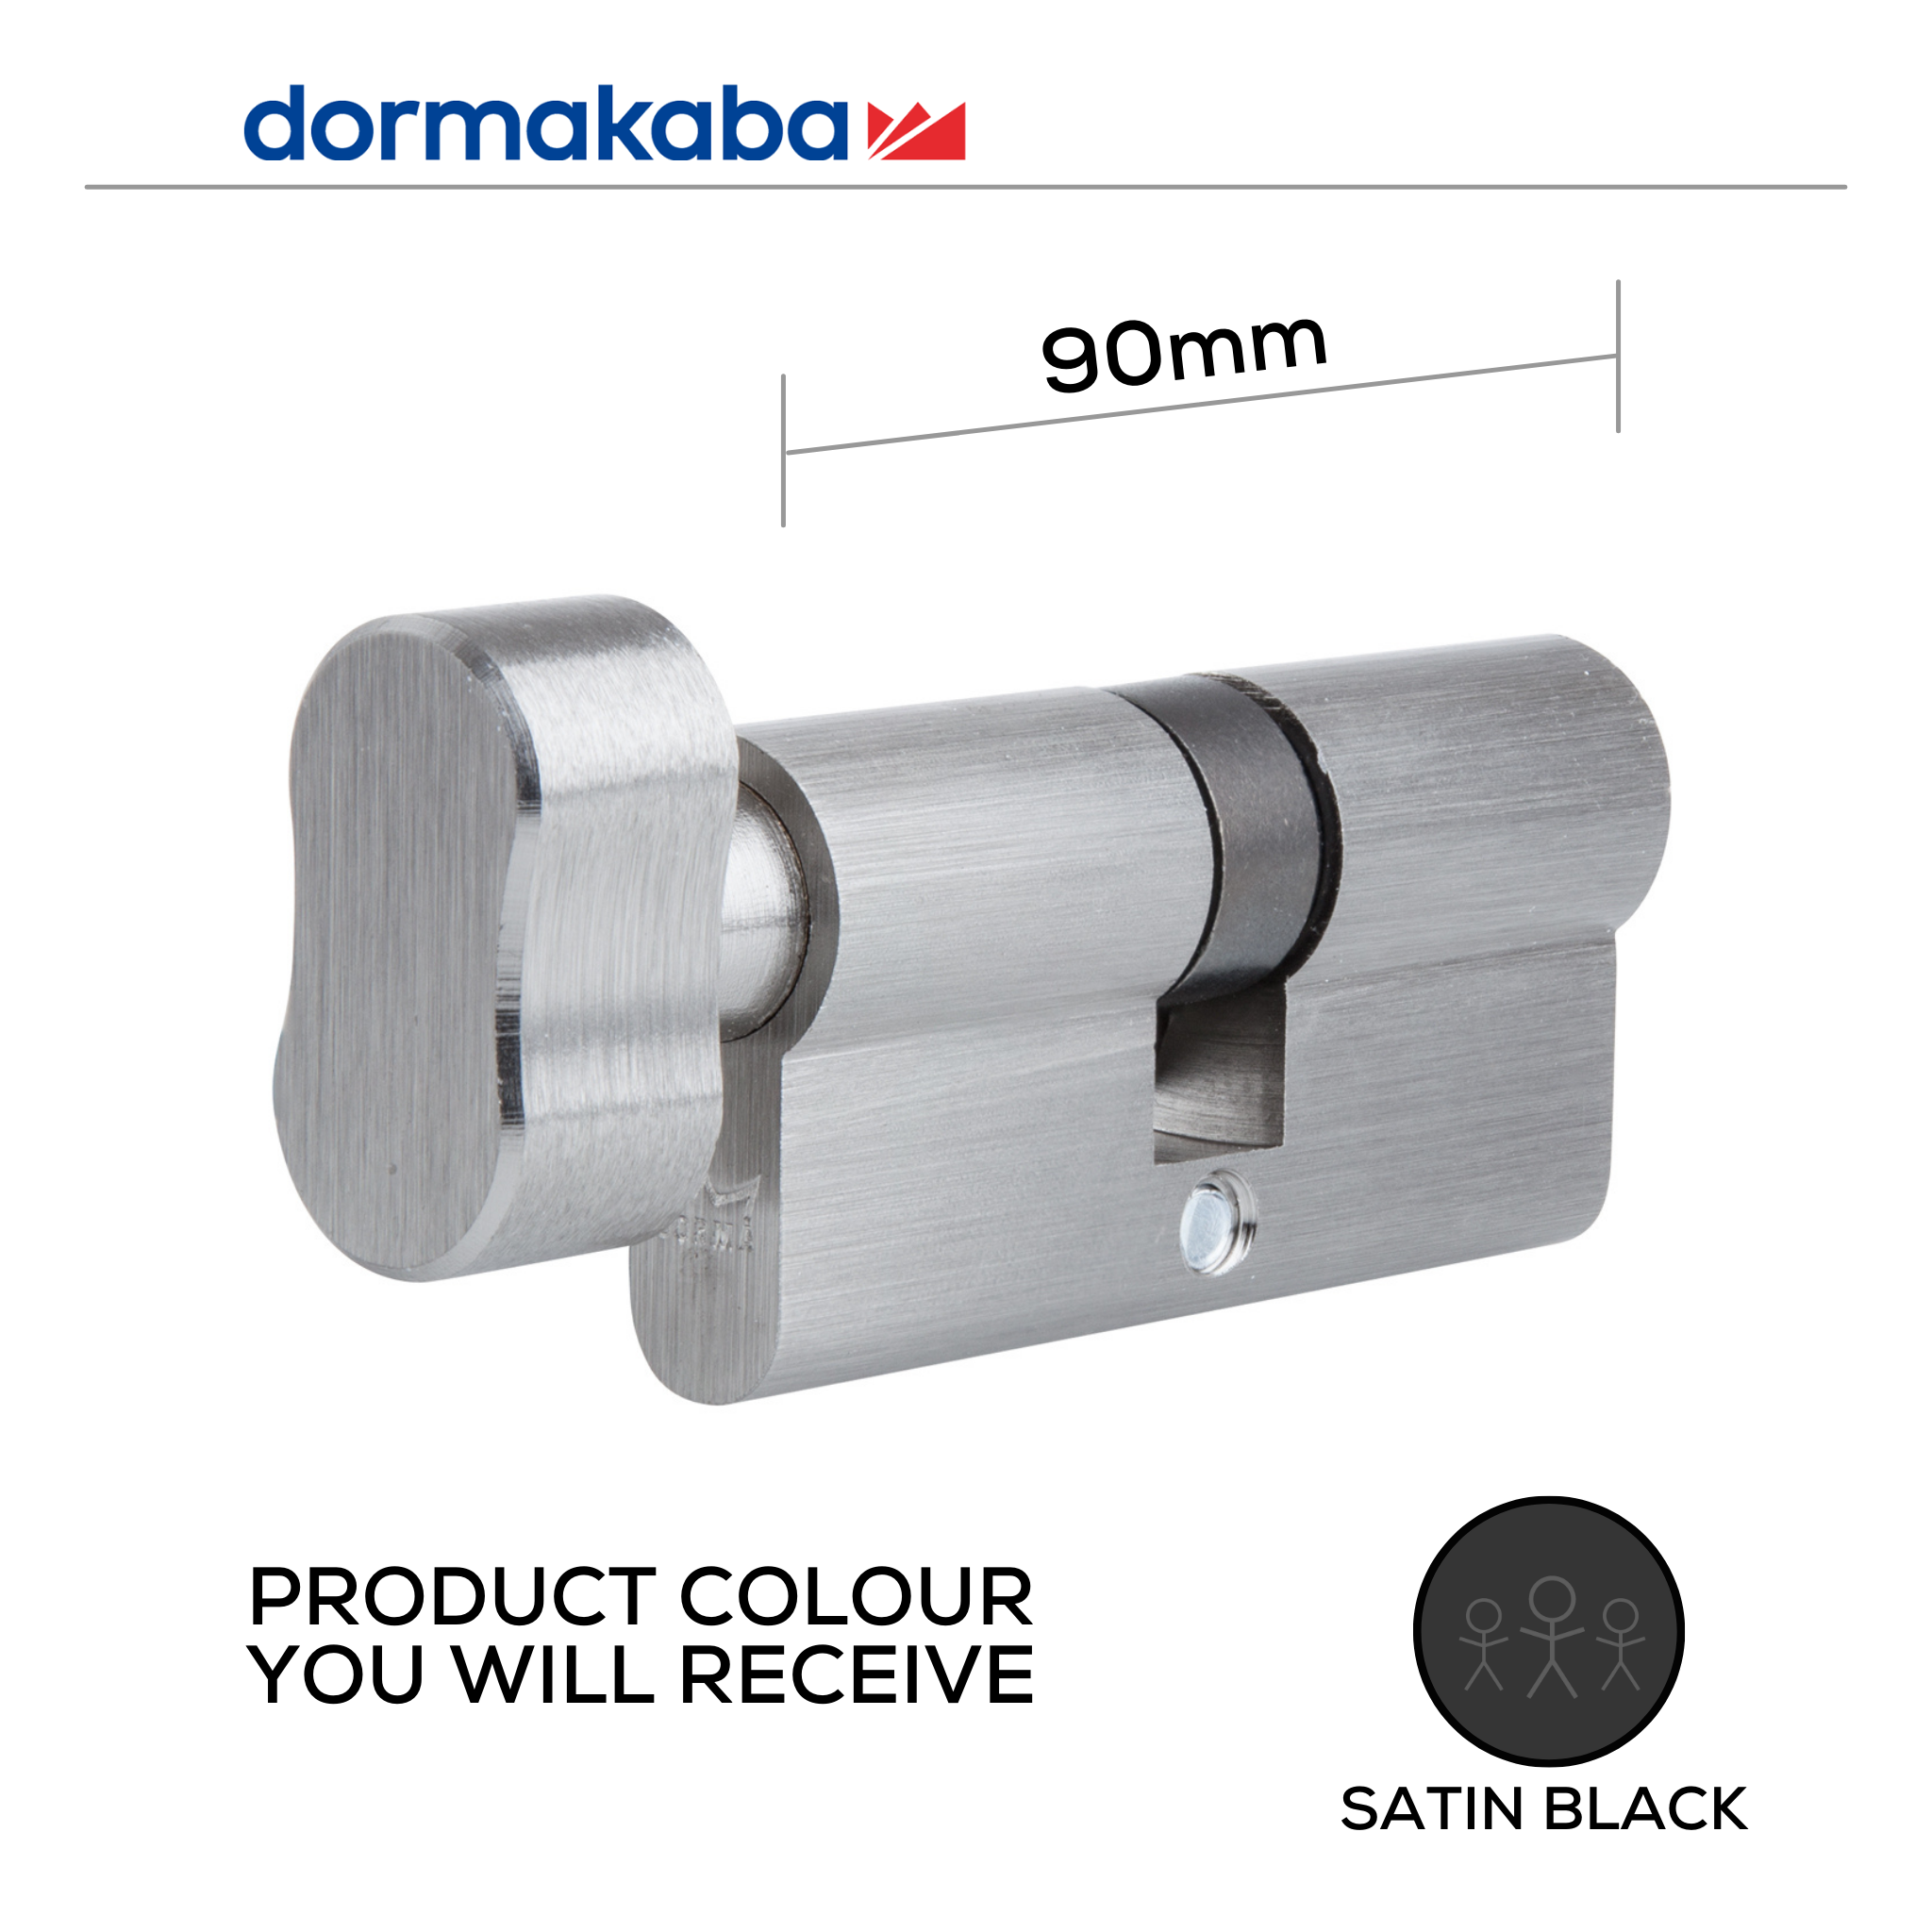 DKC209002 KD, 90mm (l), Knob, Cylinder, Keyed Different, 5 Pin, Satin Black, DORMAKABA